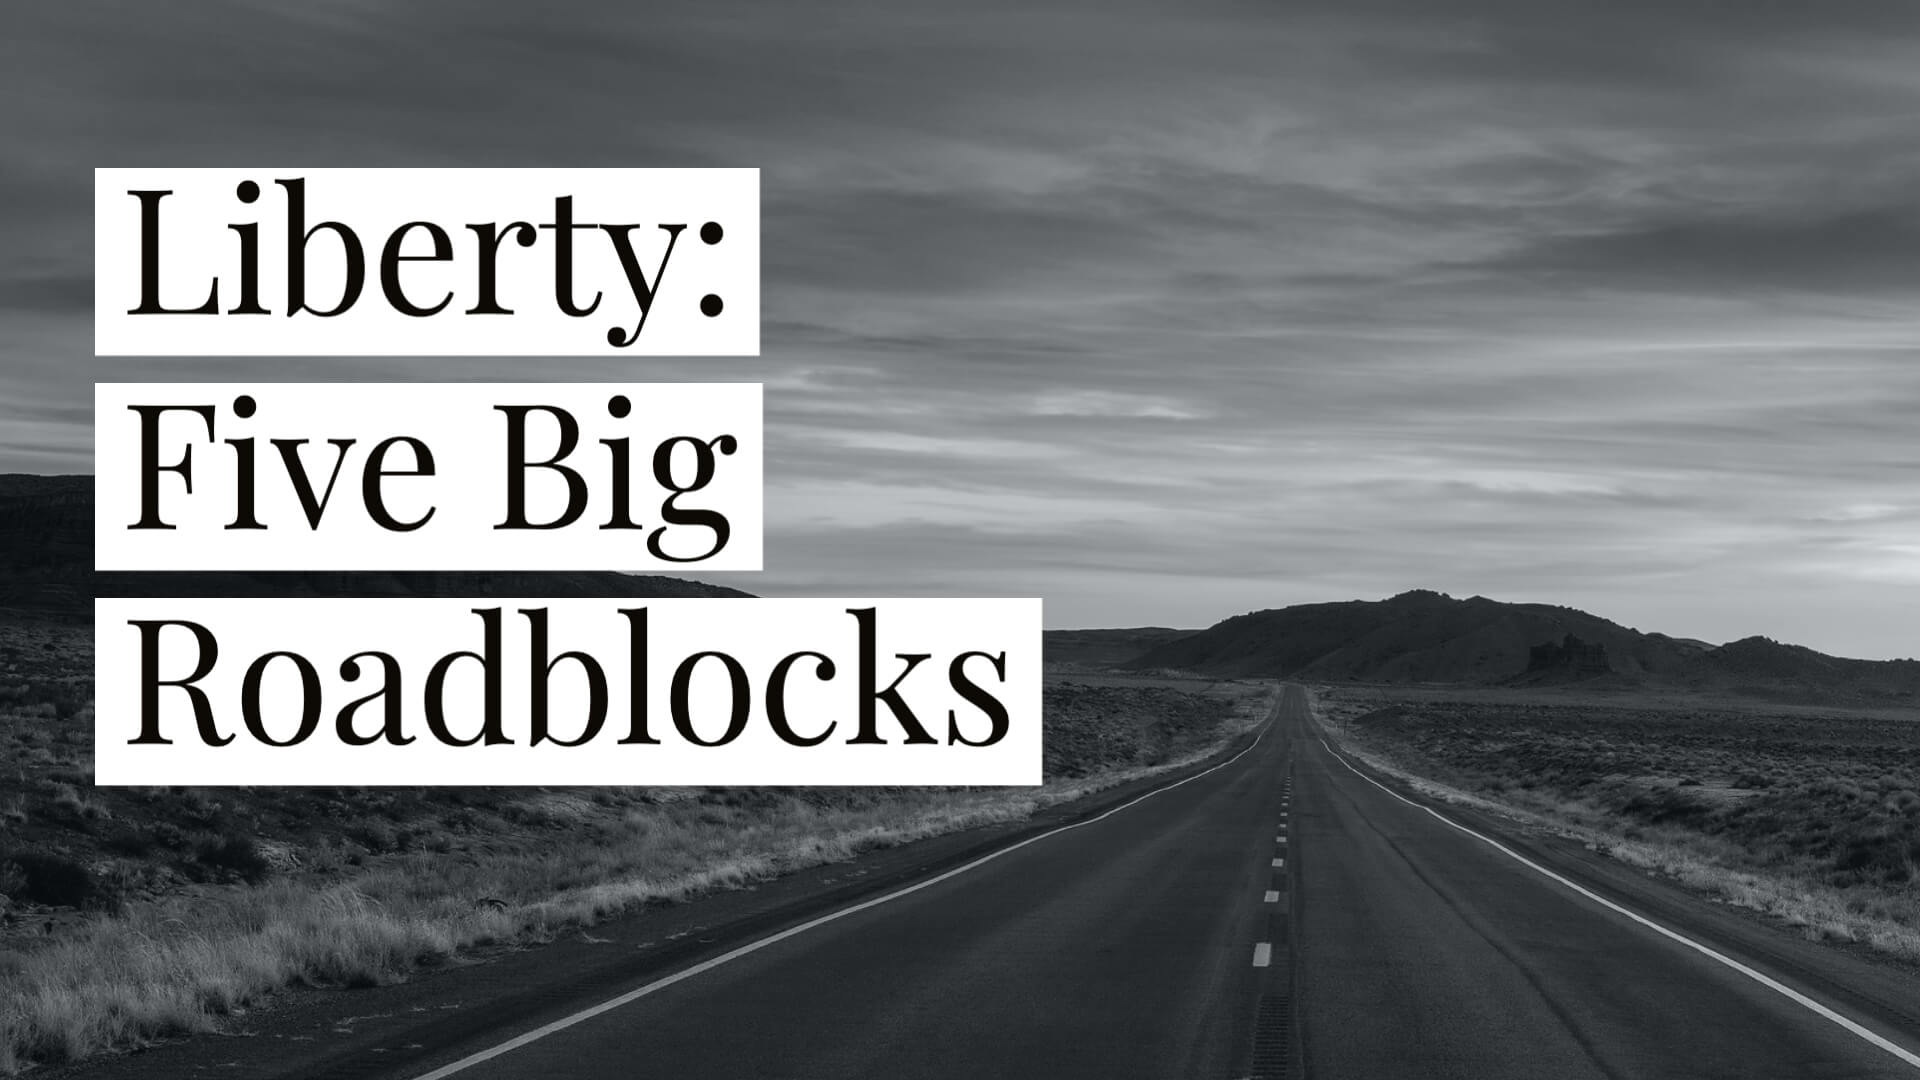 5 Big Roadblocks to Liberty